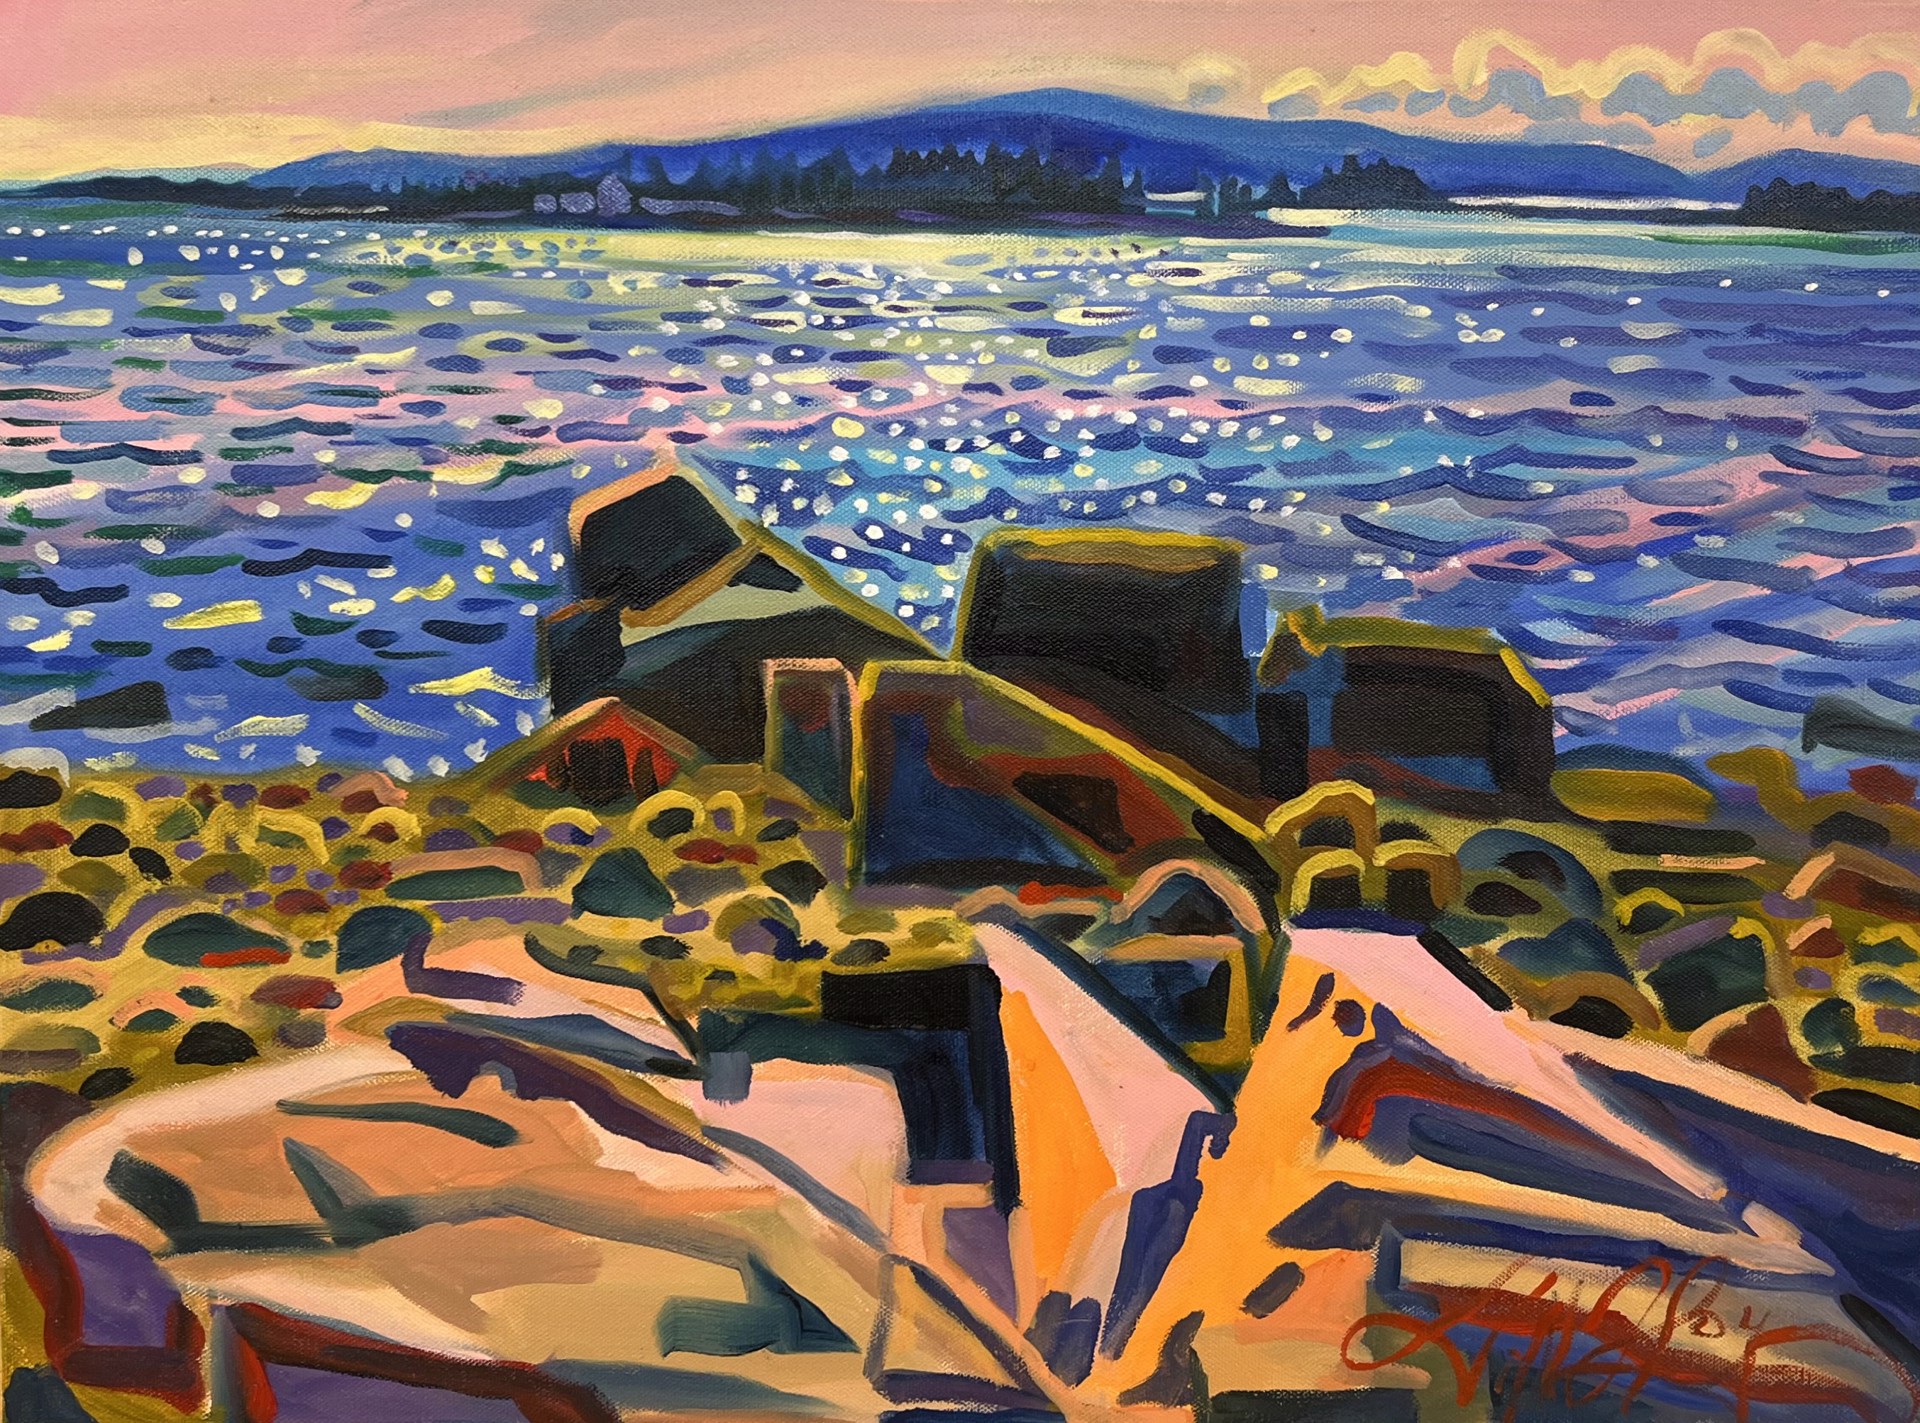 Acadia from Schoodic by Jill Hoy